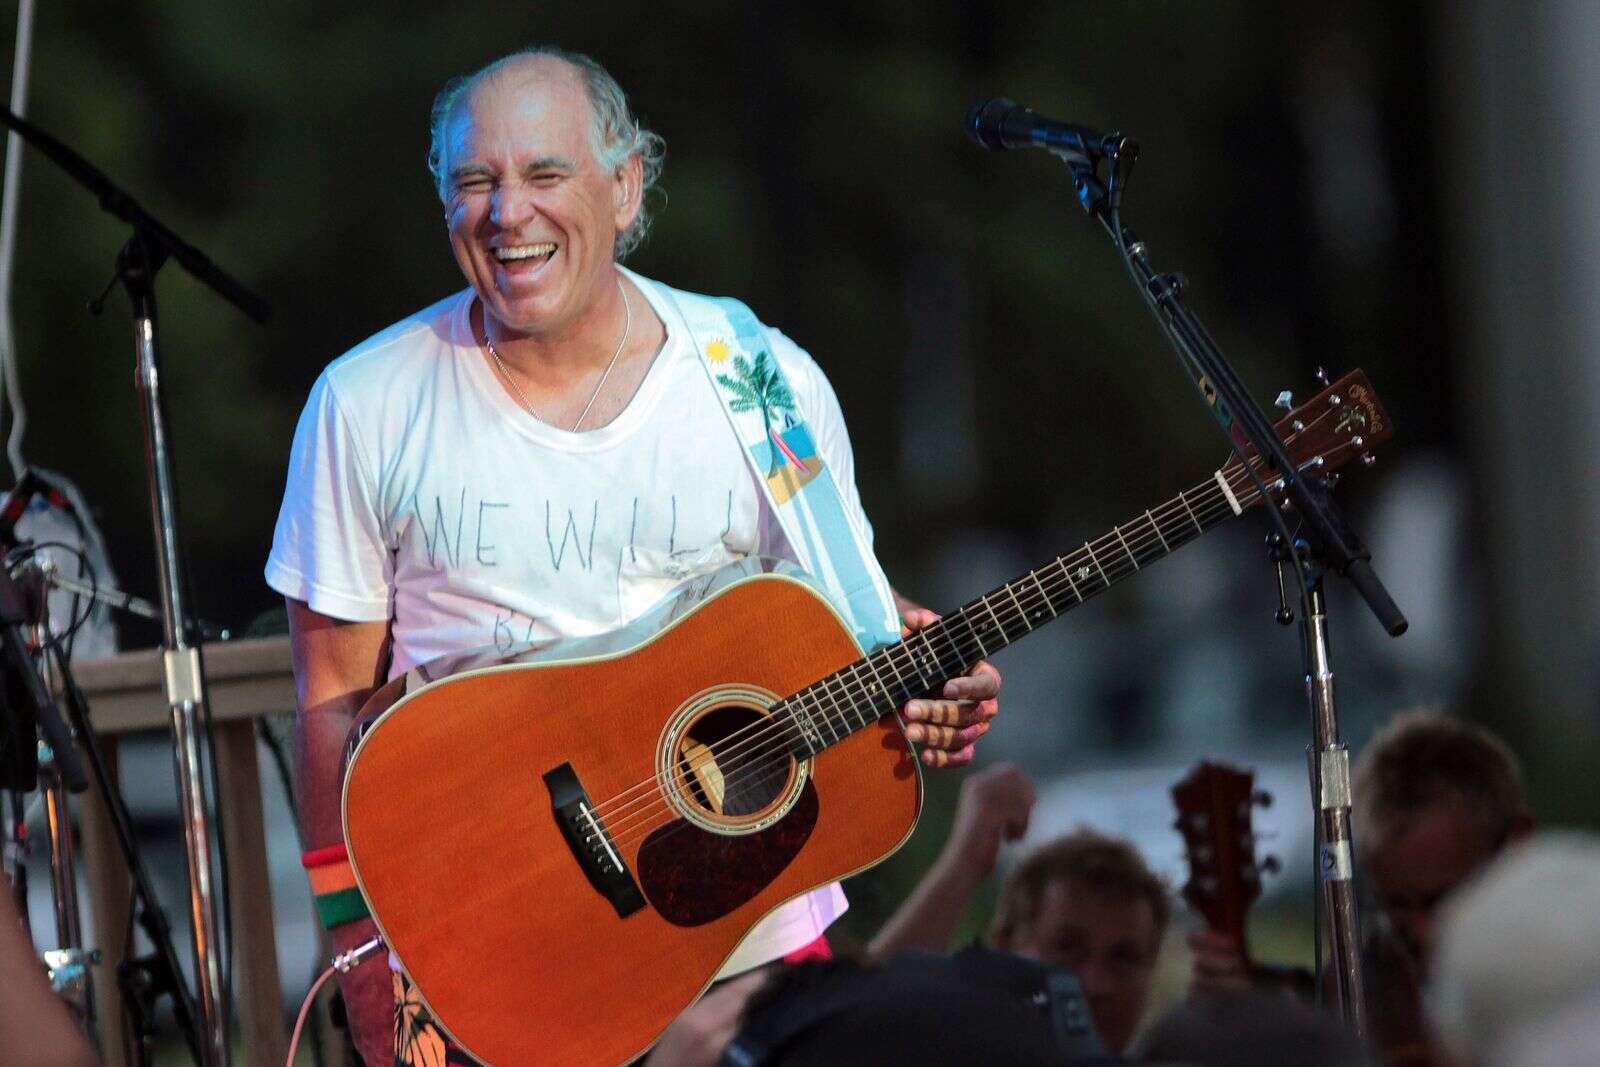 ‘Margaritaville’ singer Jimmy Buffett, who turned beach-bum life into an empire, dies at 76